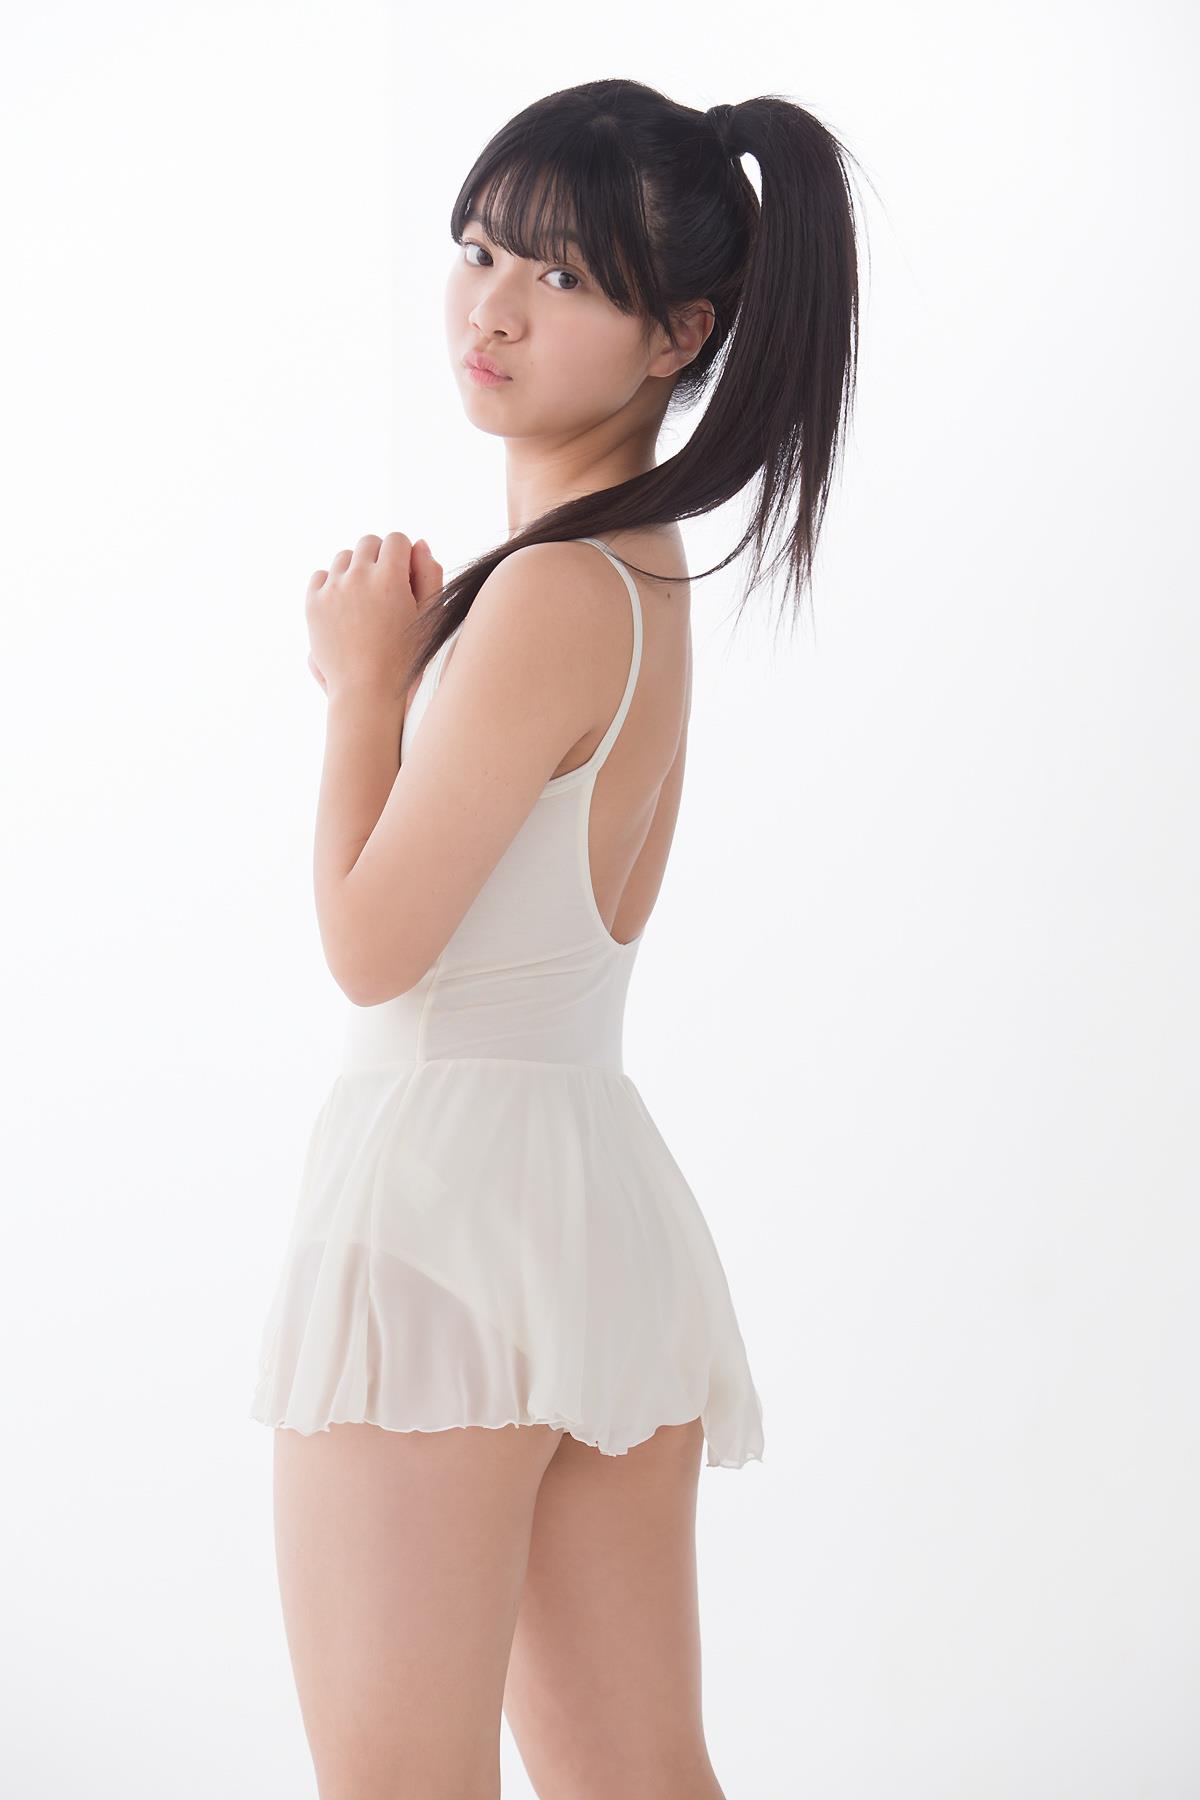 Minisuka.tv Saria Natsume 夏目咲莉愛 - Premium Gallery 2.2 - 16.jpg